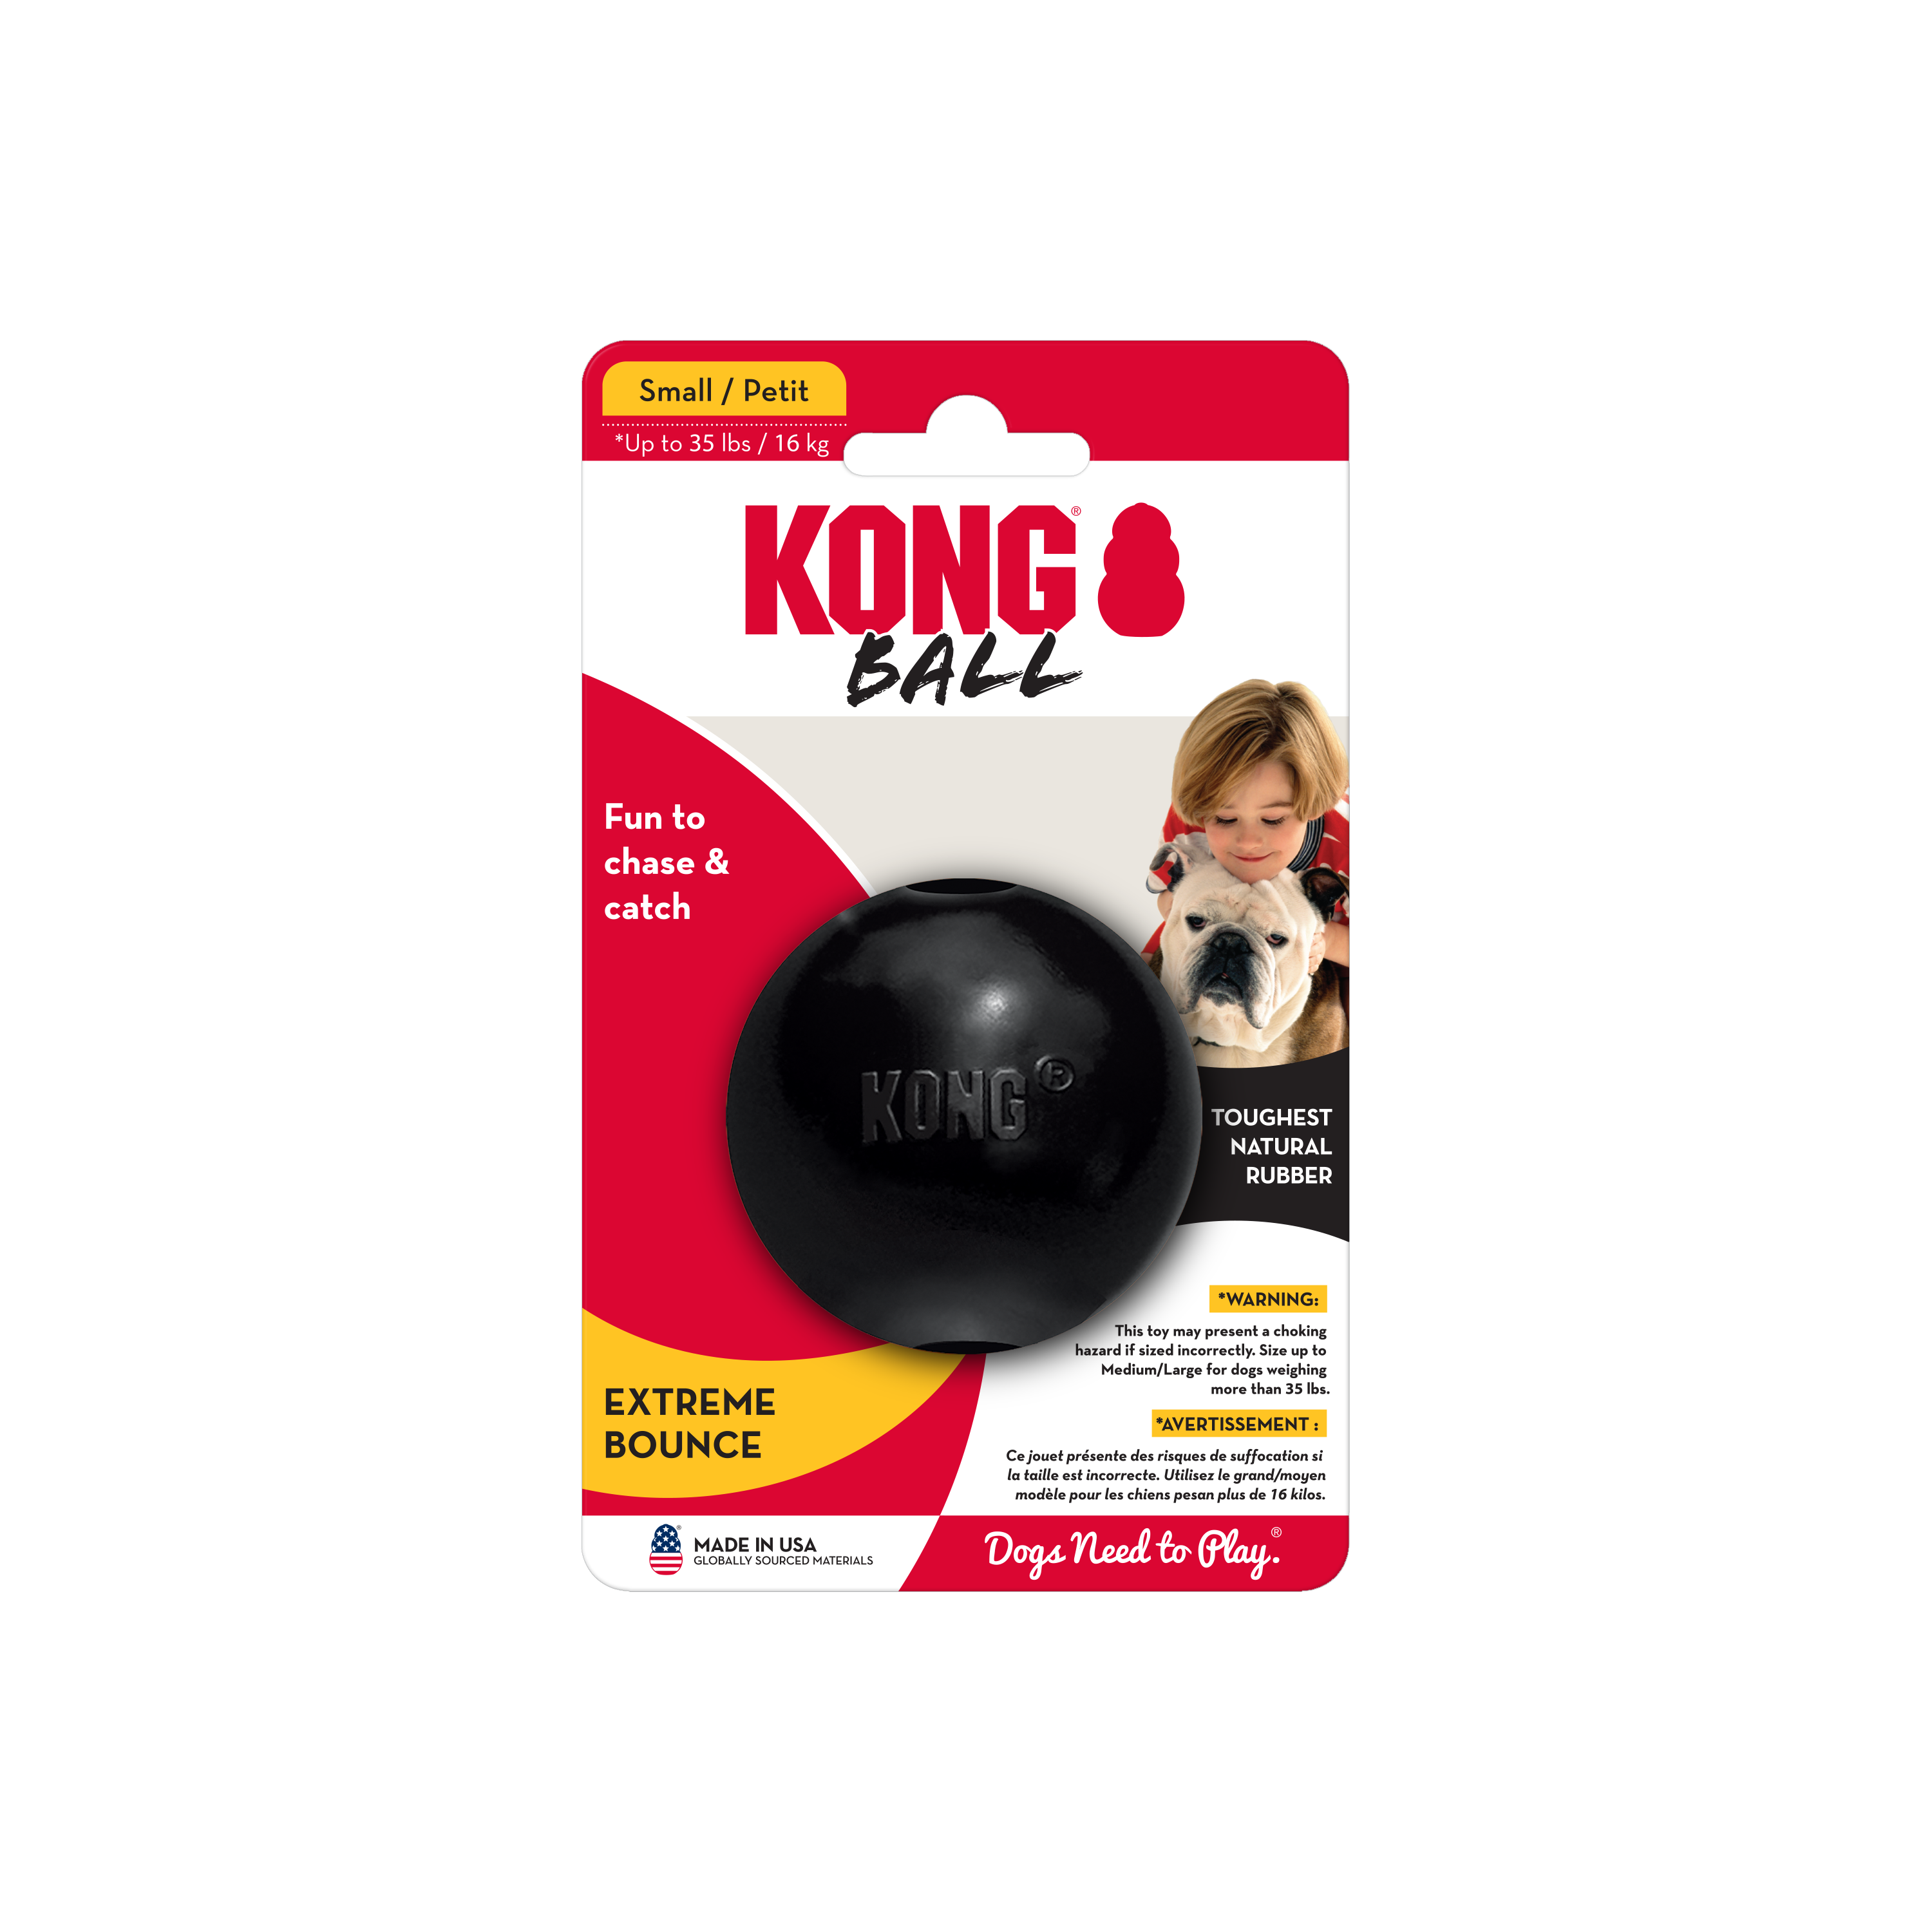 KONG Extreme Ball onpack product image